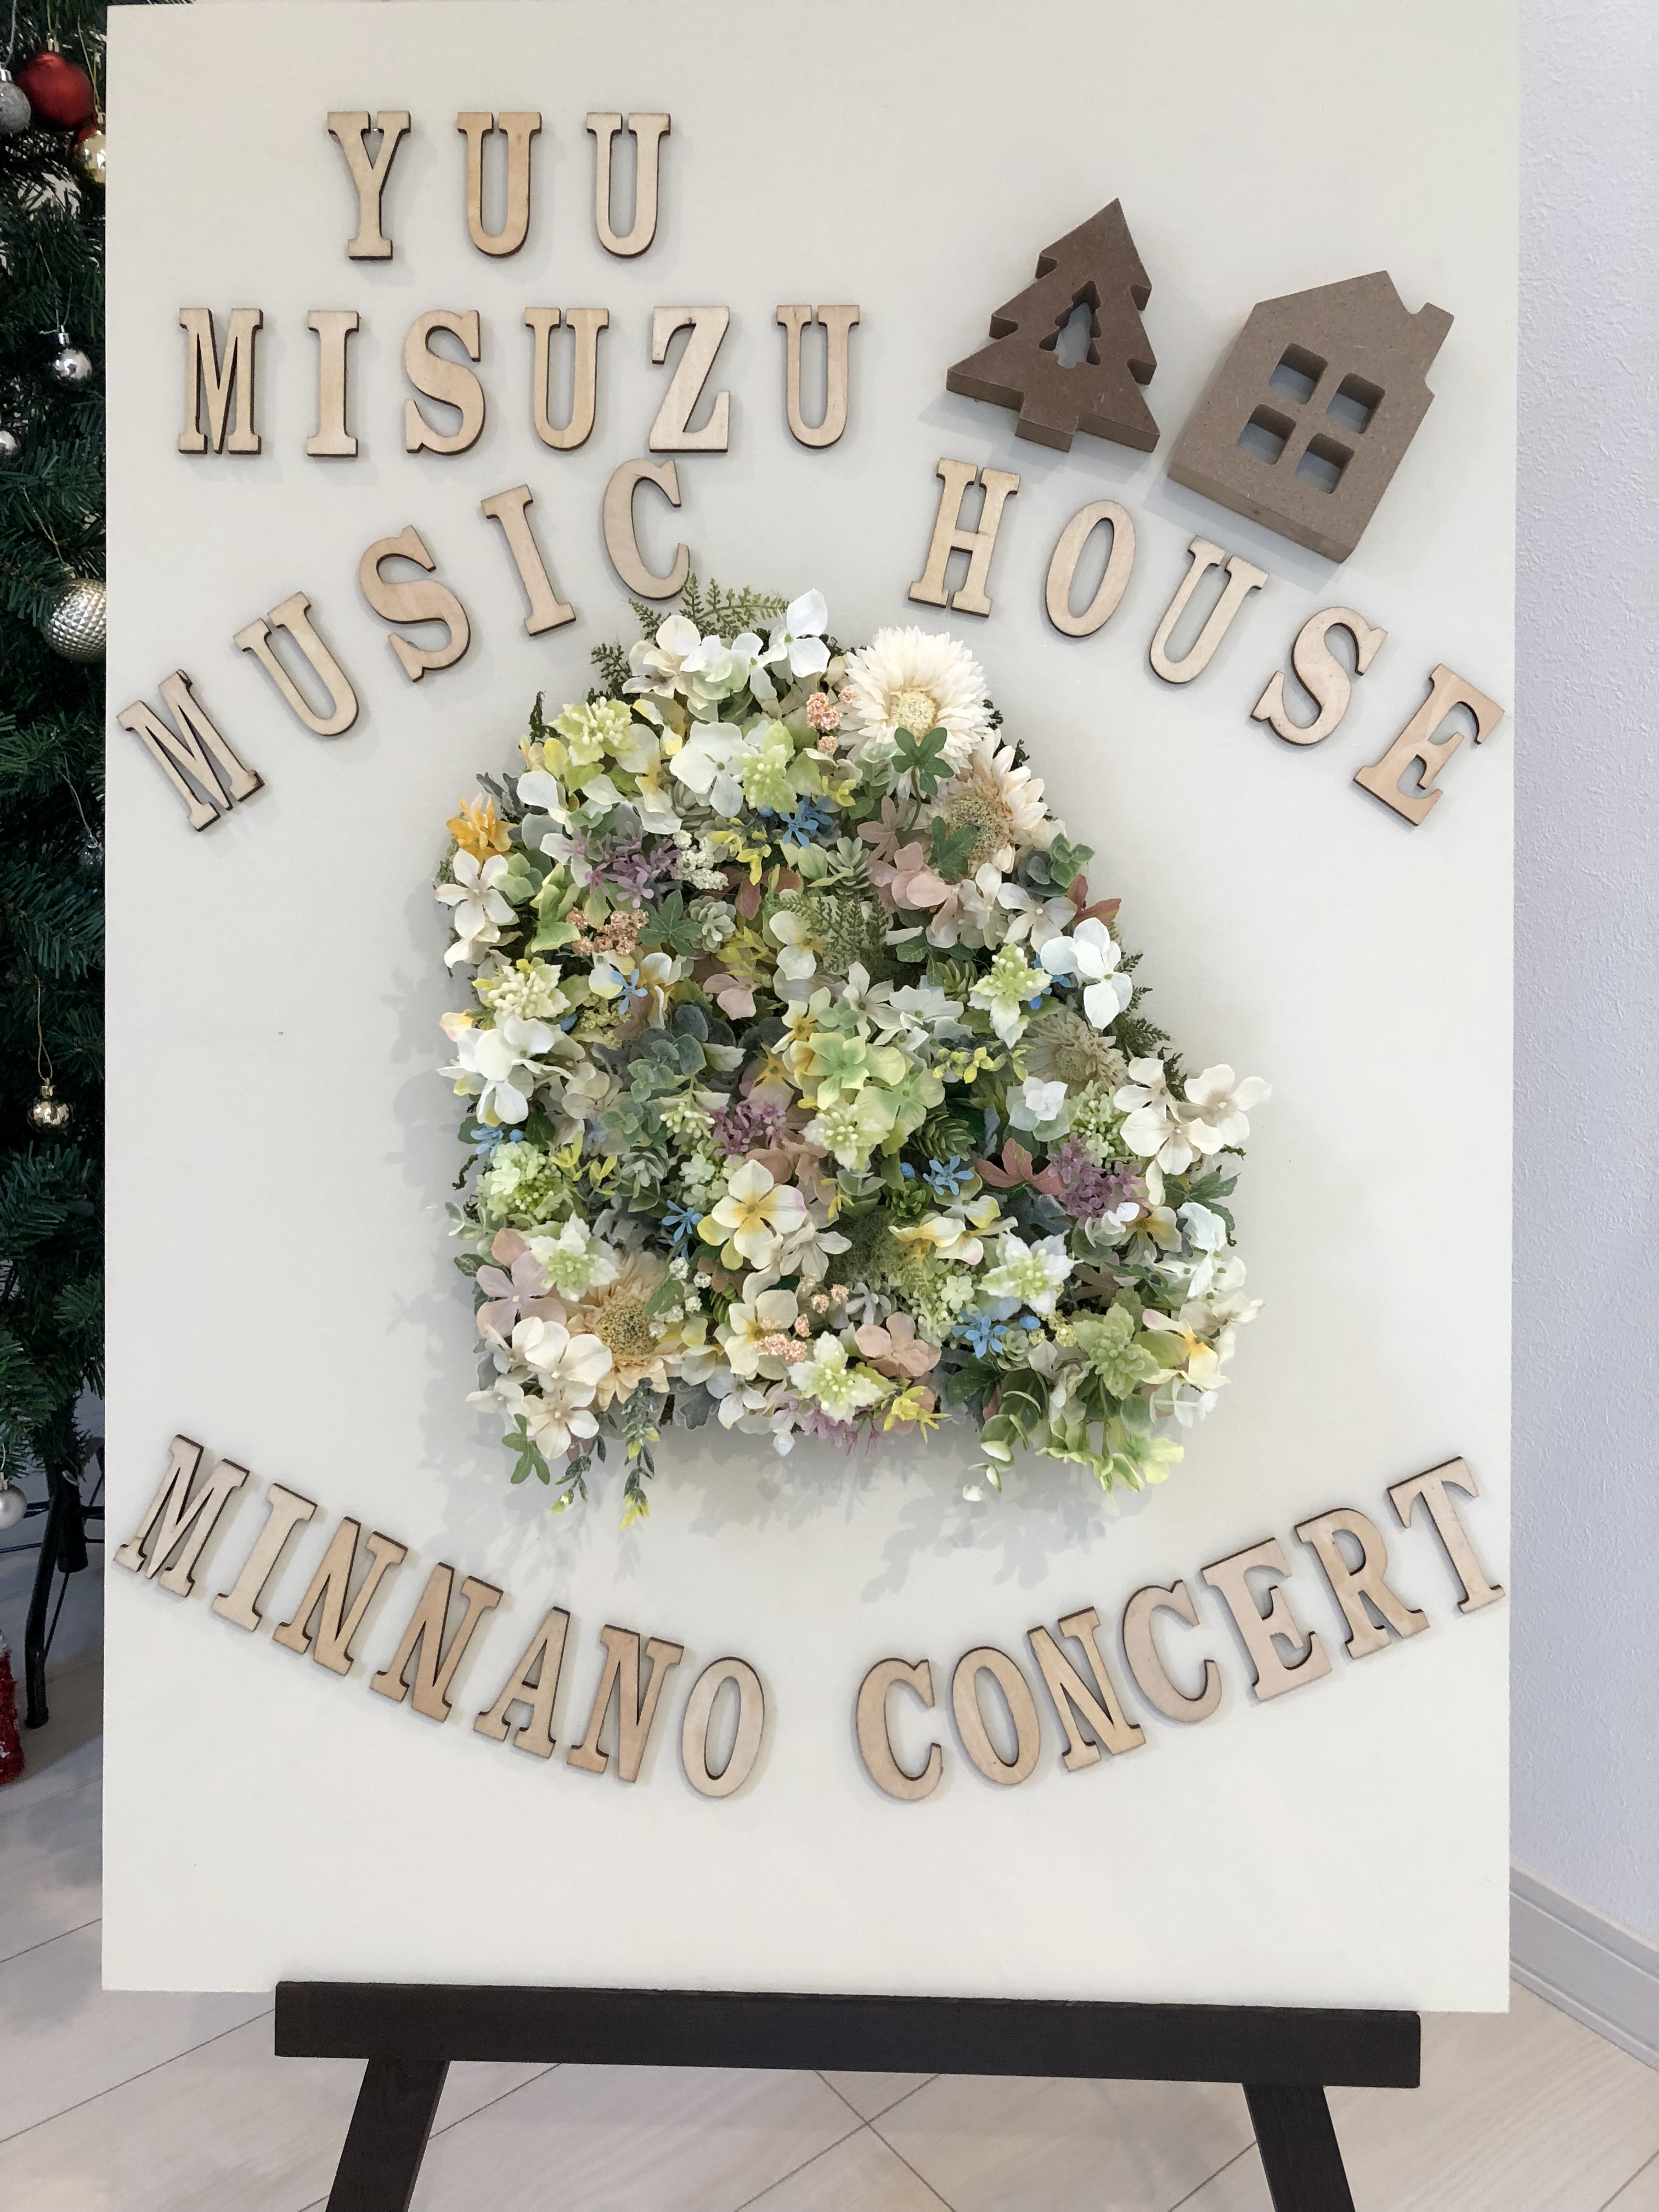 IMG_1983.JPG alt="Misuzu Music Houseみんなのコンサート看板"